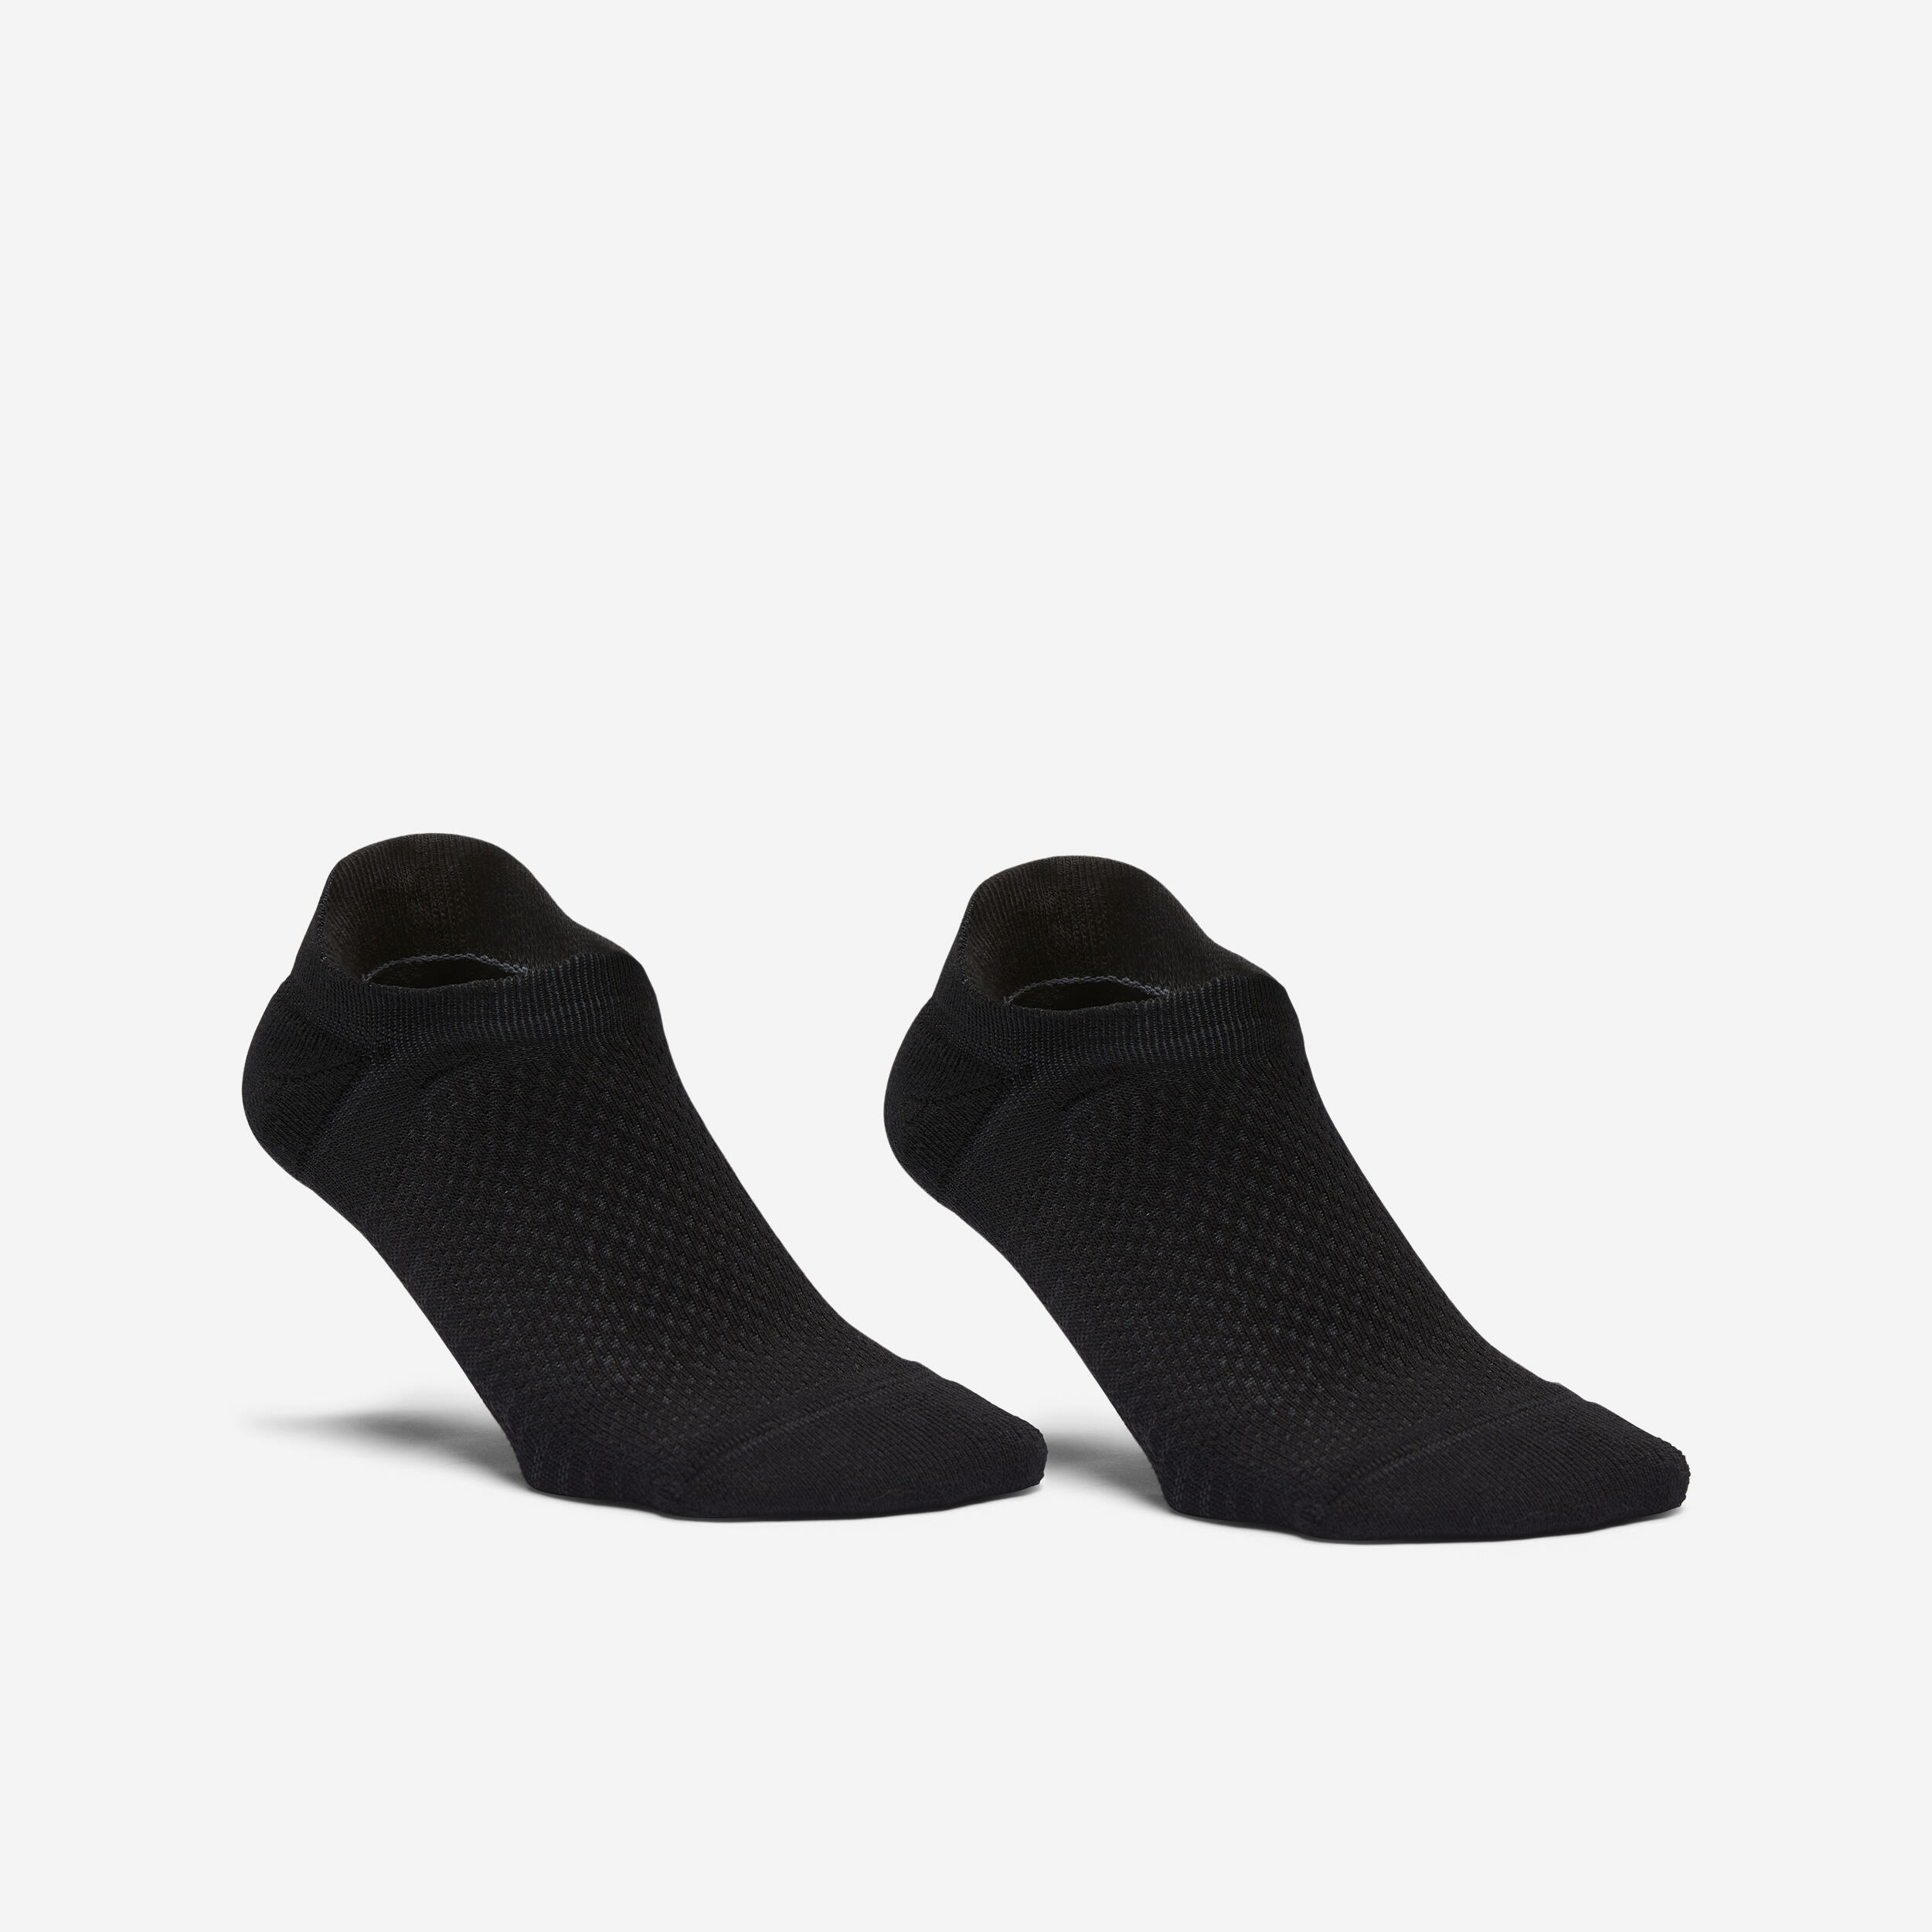 URBAN WALK Deocell tech ankle socks - pack of 2 - black 1/6